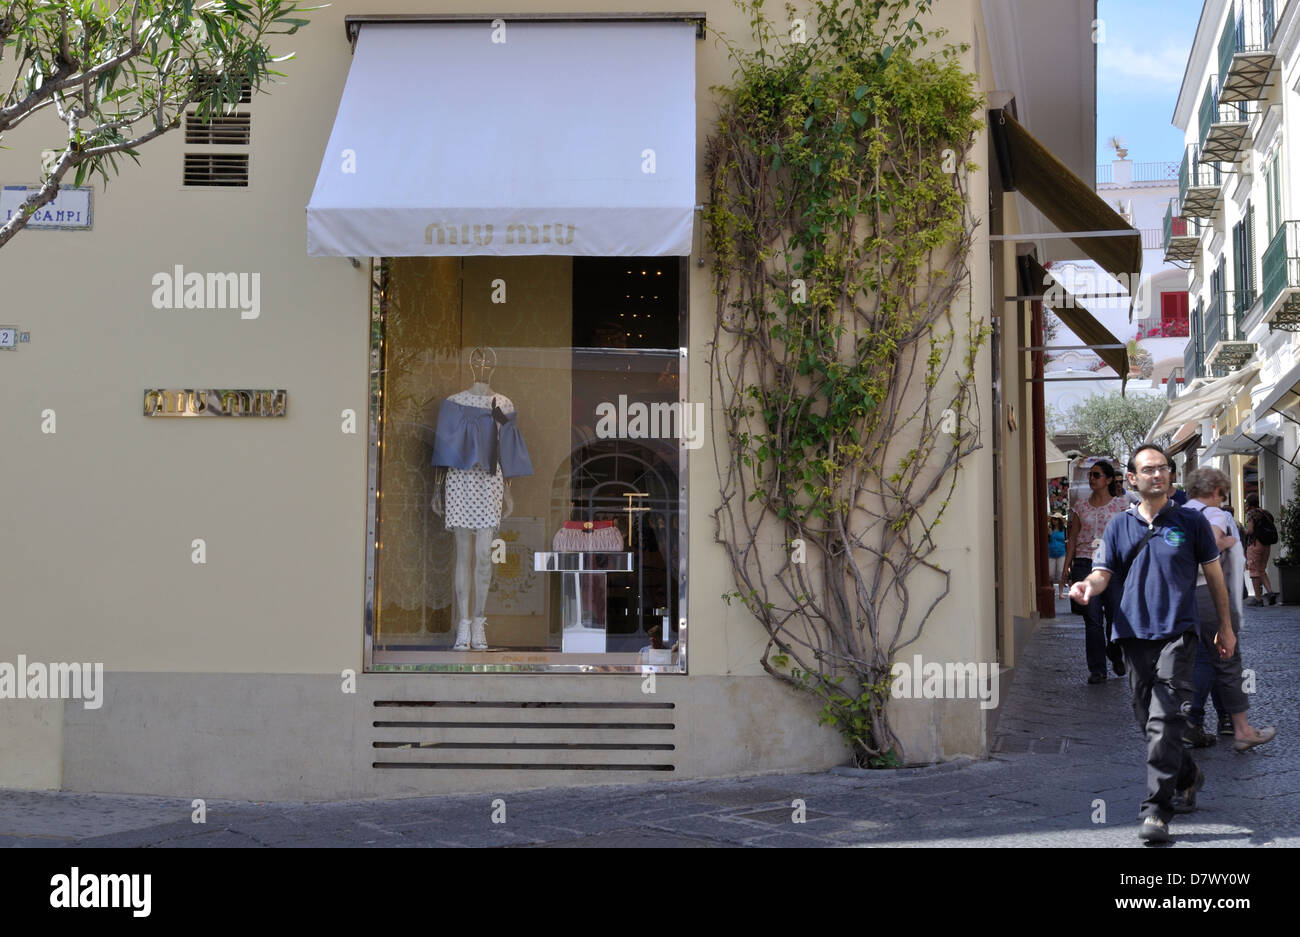 Miu Miu ladies' fashion store in Capri town, on the island of Capri. Stock Photo